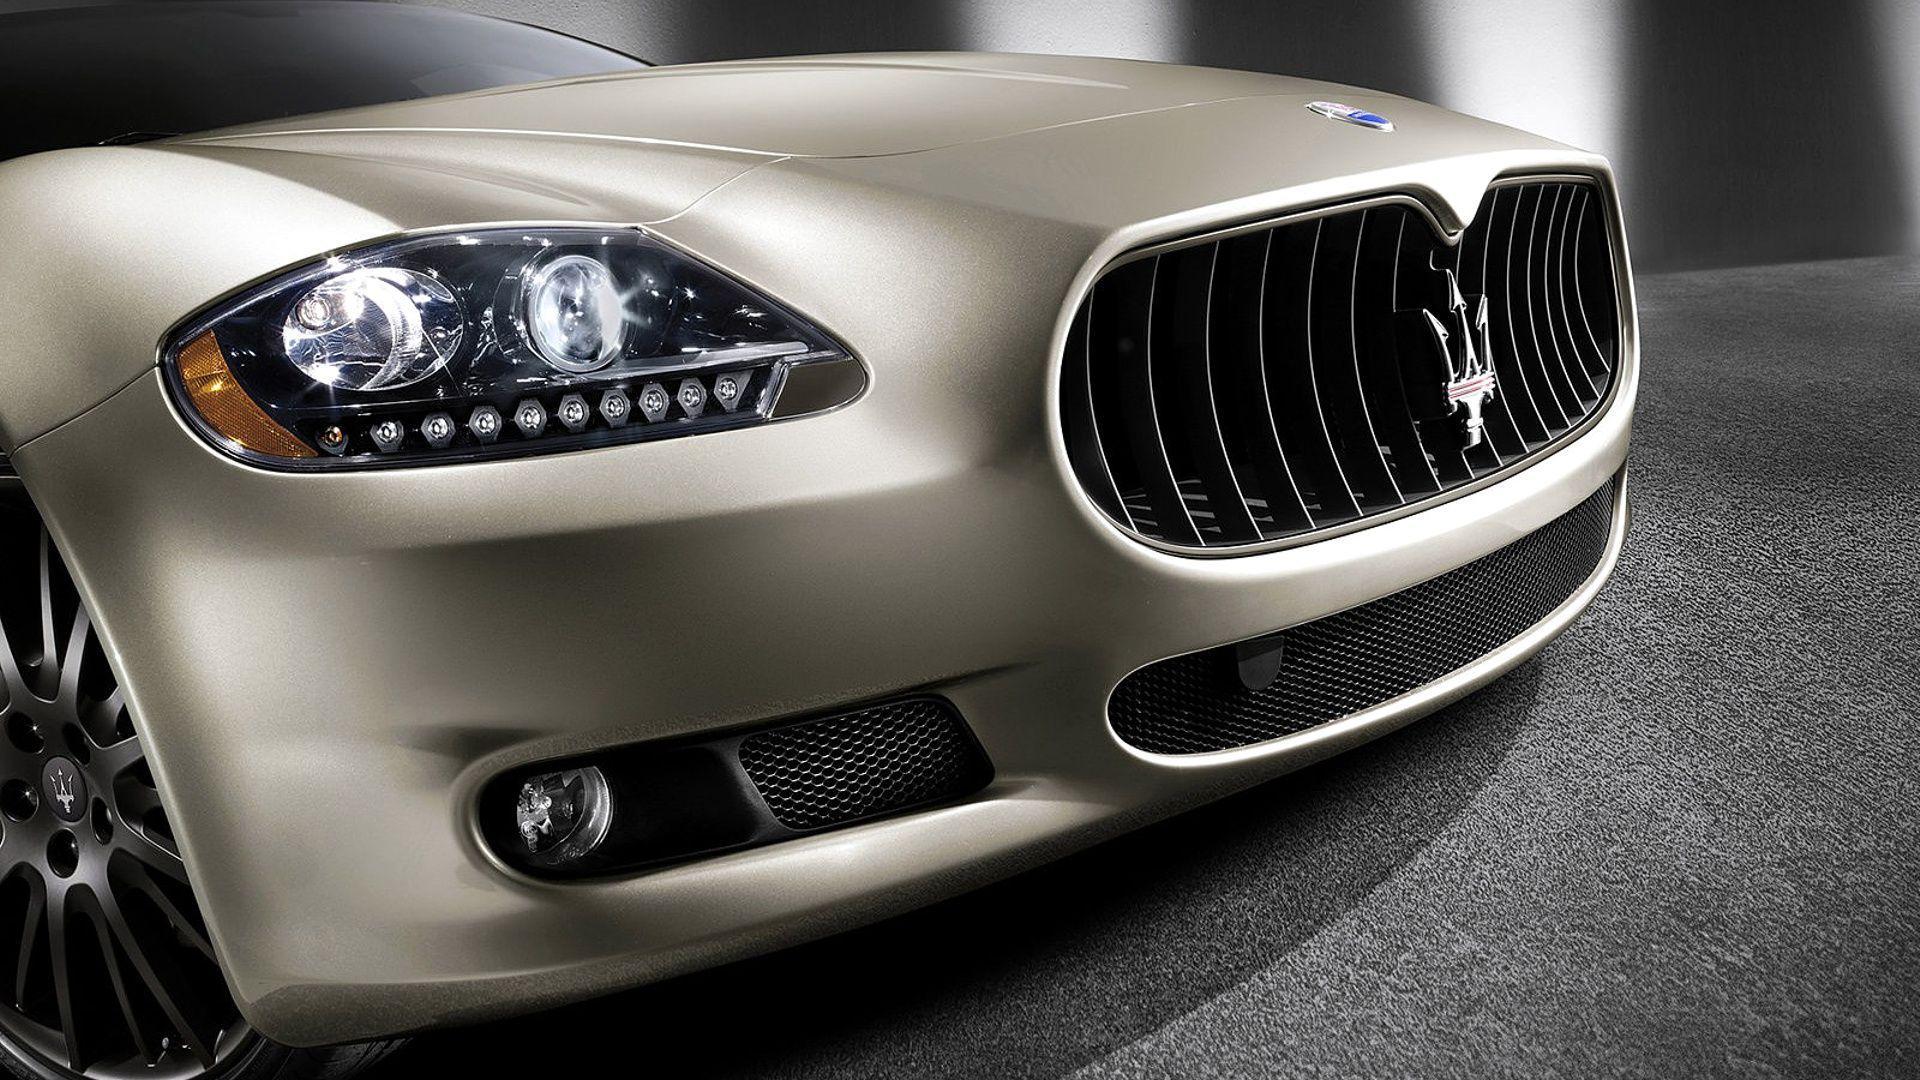 Maserati quattroporte on wallpaper in HD quality for your desktop